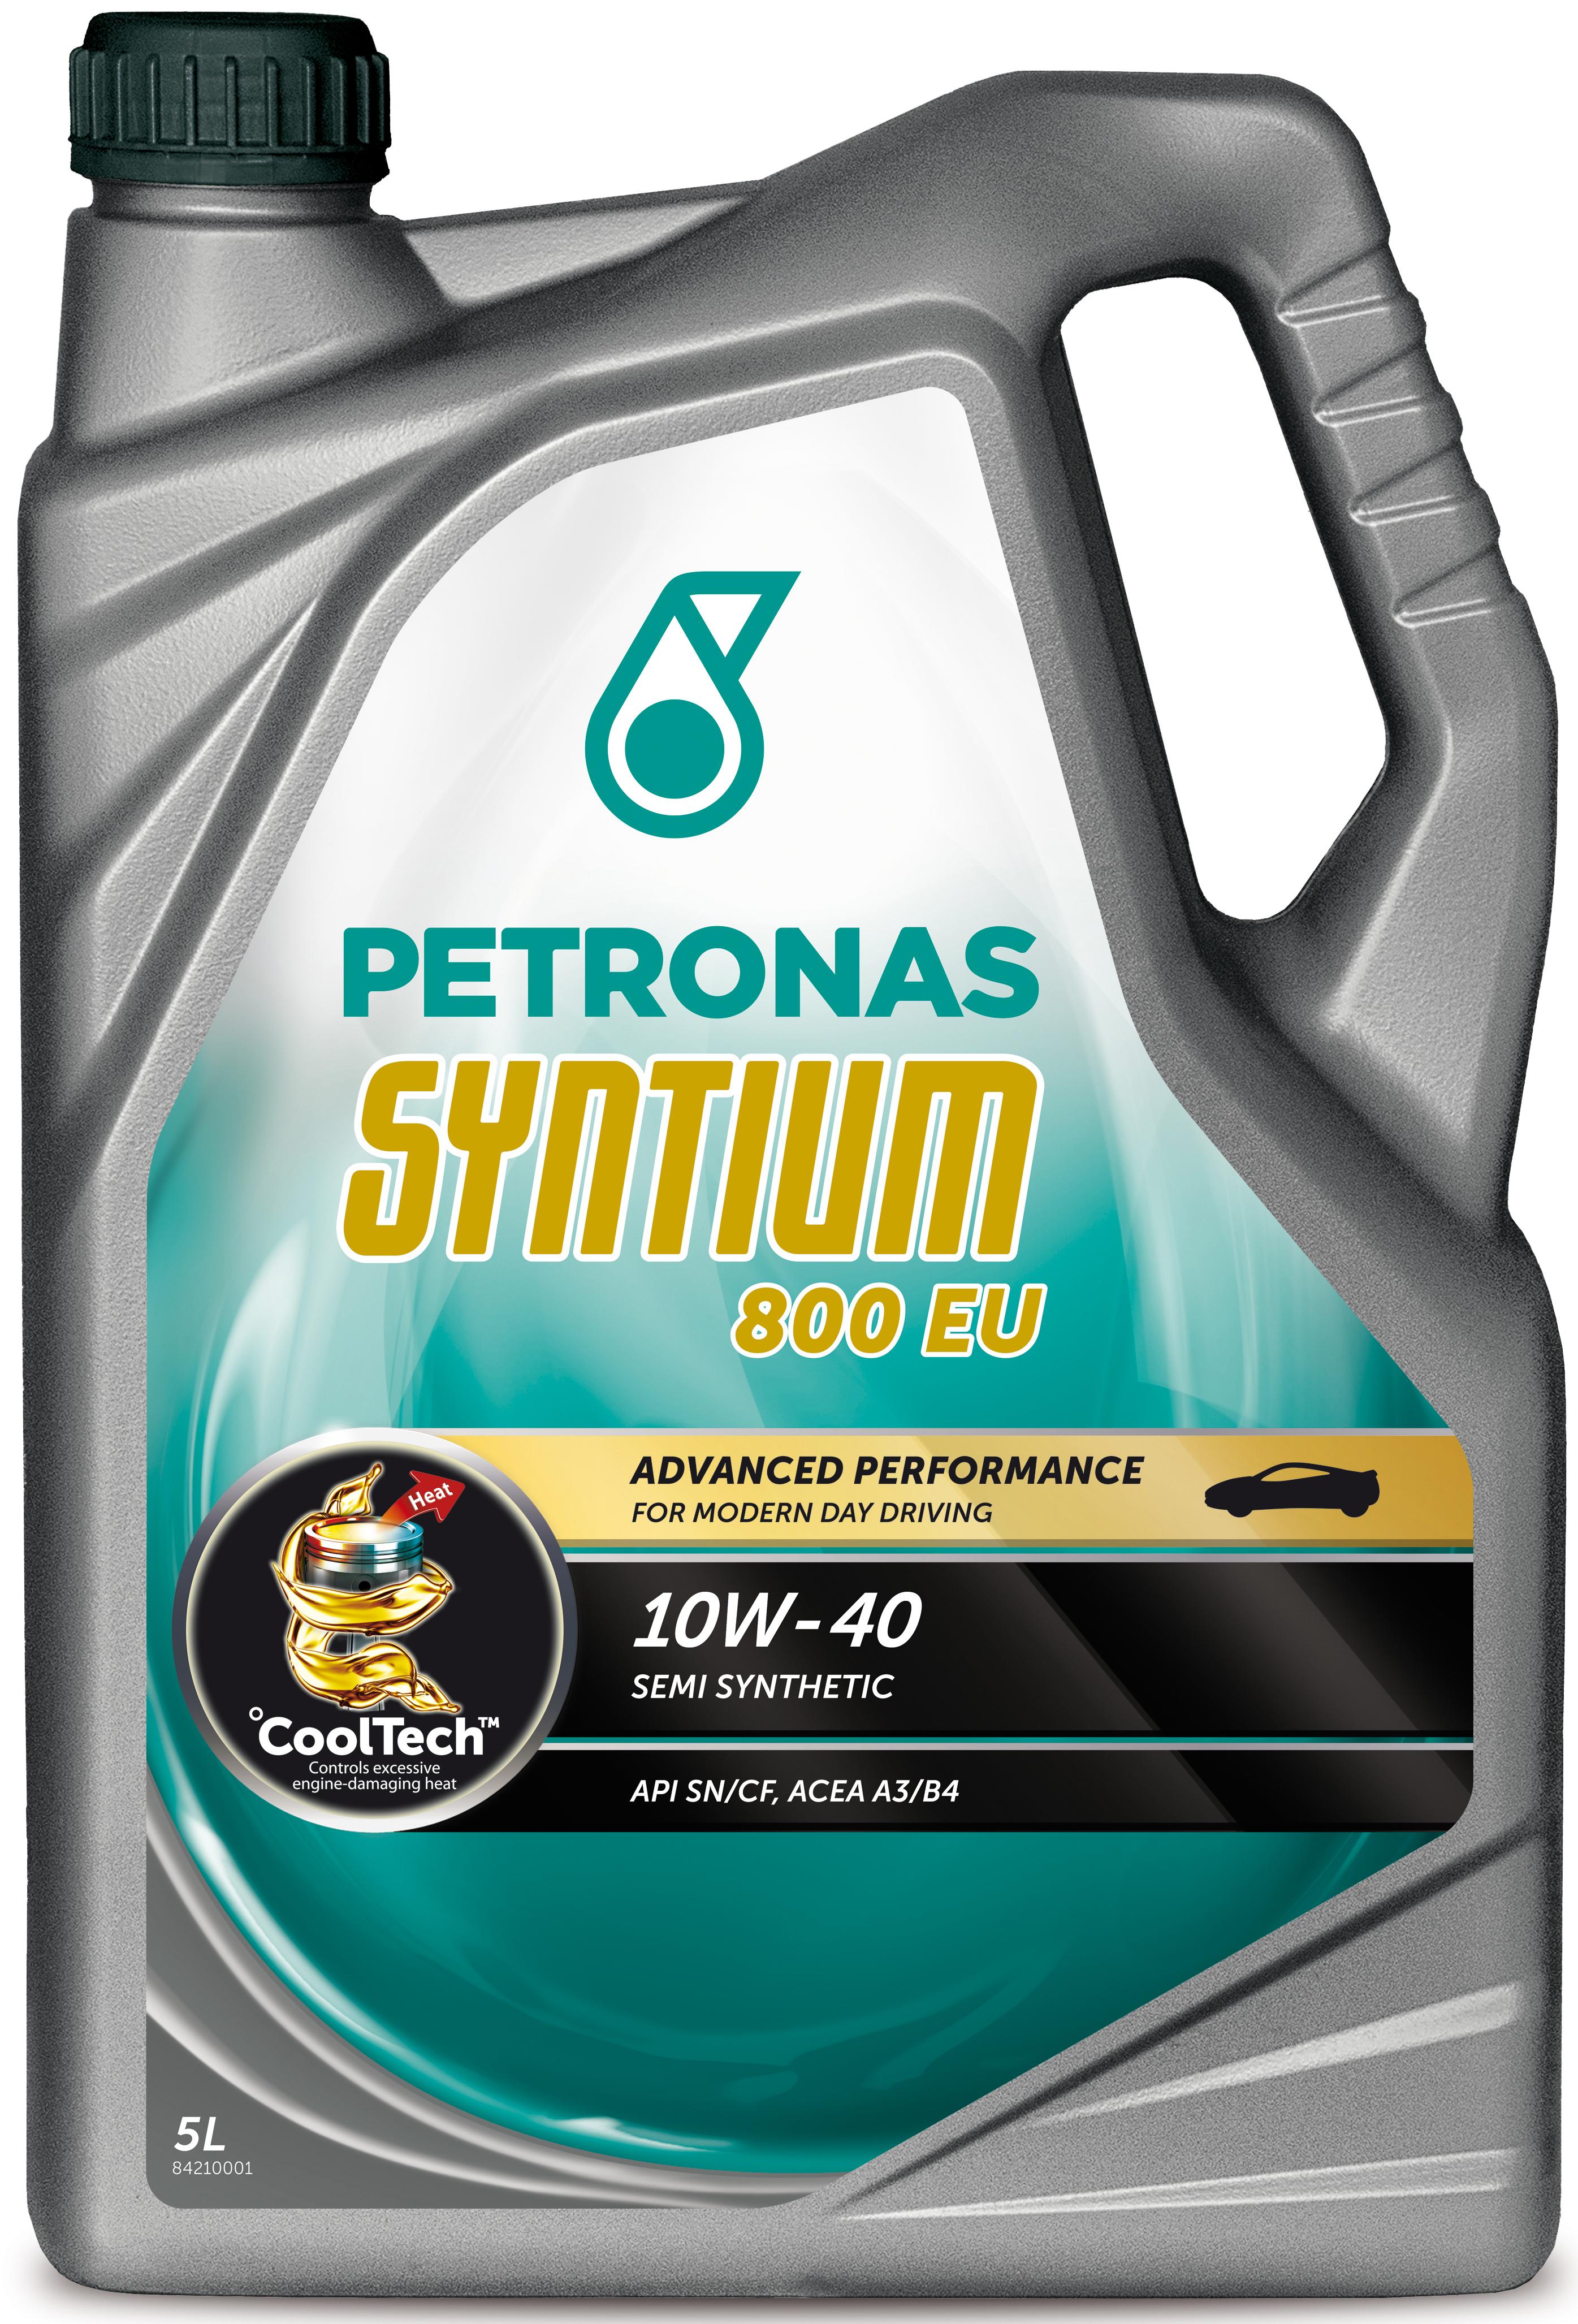 Petronas Syntium 800 Eu 10W-40 Oil 5L